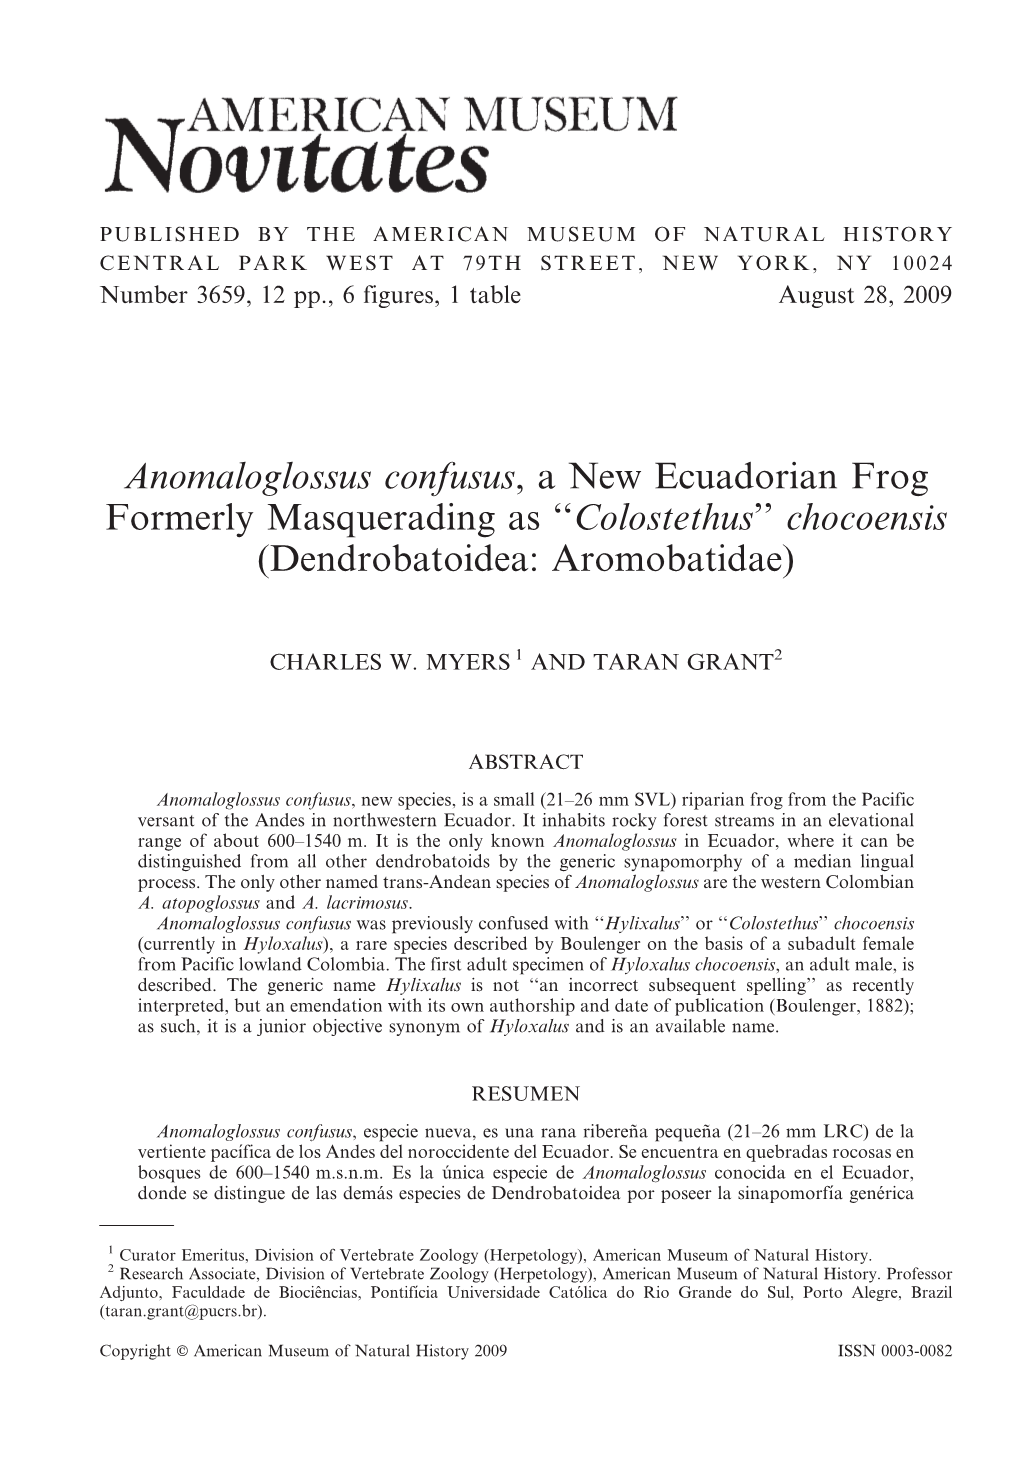 Anomaloglossus Confusus, a New Ecuadorian Frog Formerly Masquerading As ‘‘Colostethus’’ Chocoensis (Dendrobatoidea: Aromobatidae)